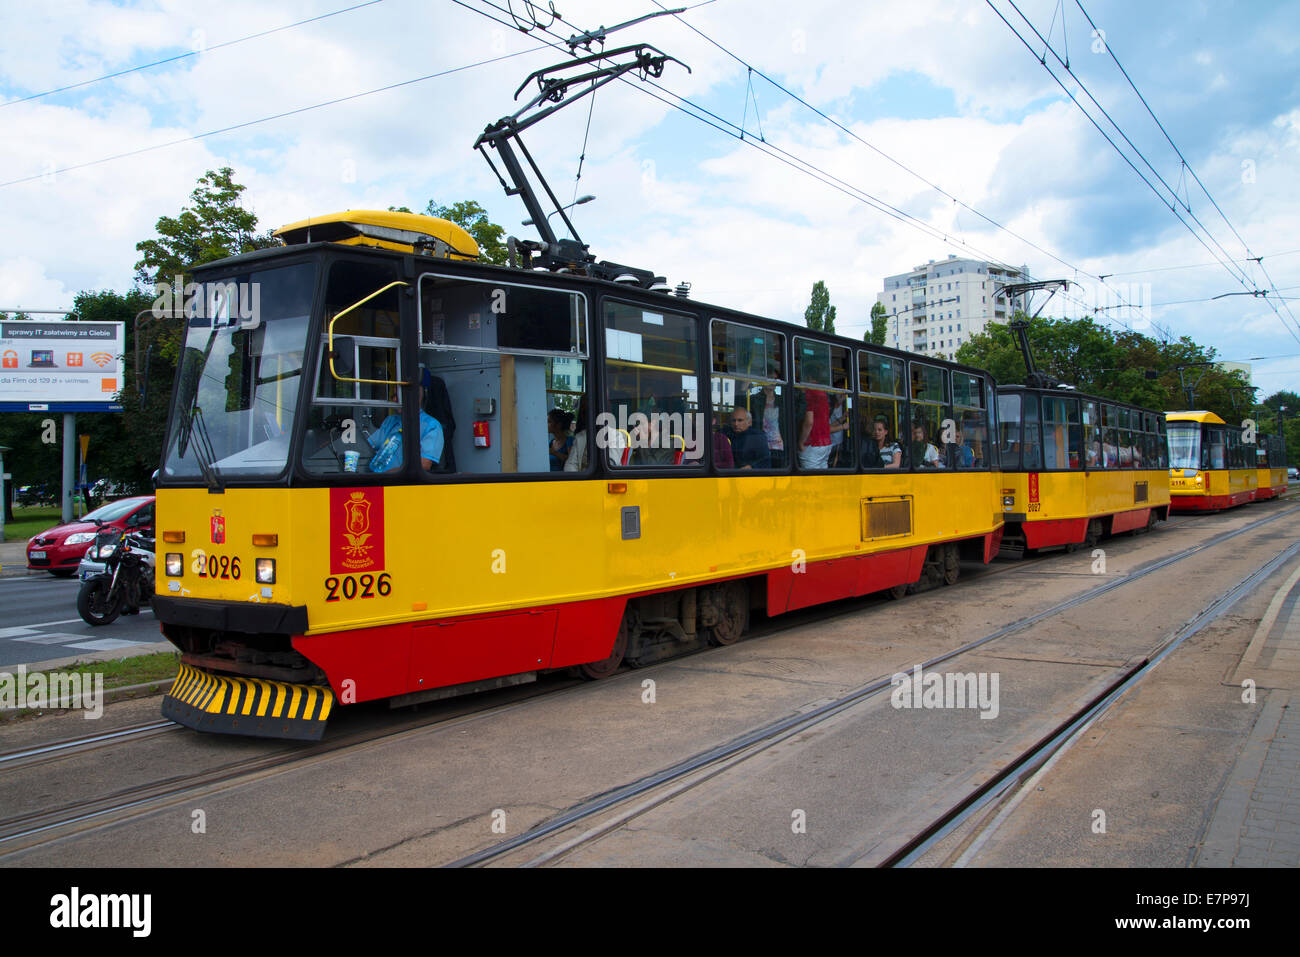 June 2014: Tram, public transport in Warsaw Poland, Europe Stock Photo